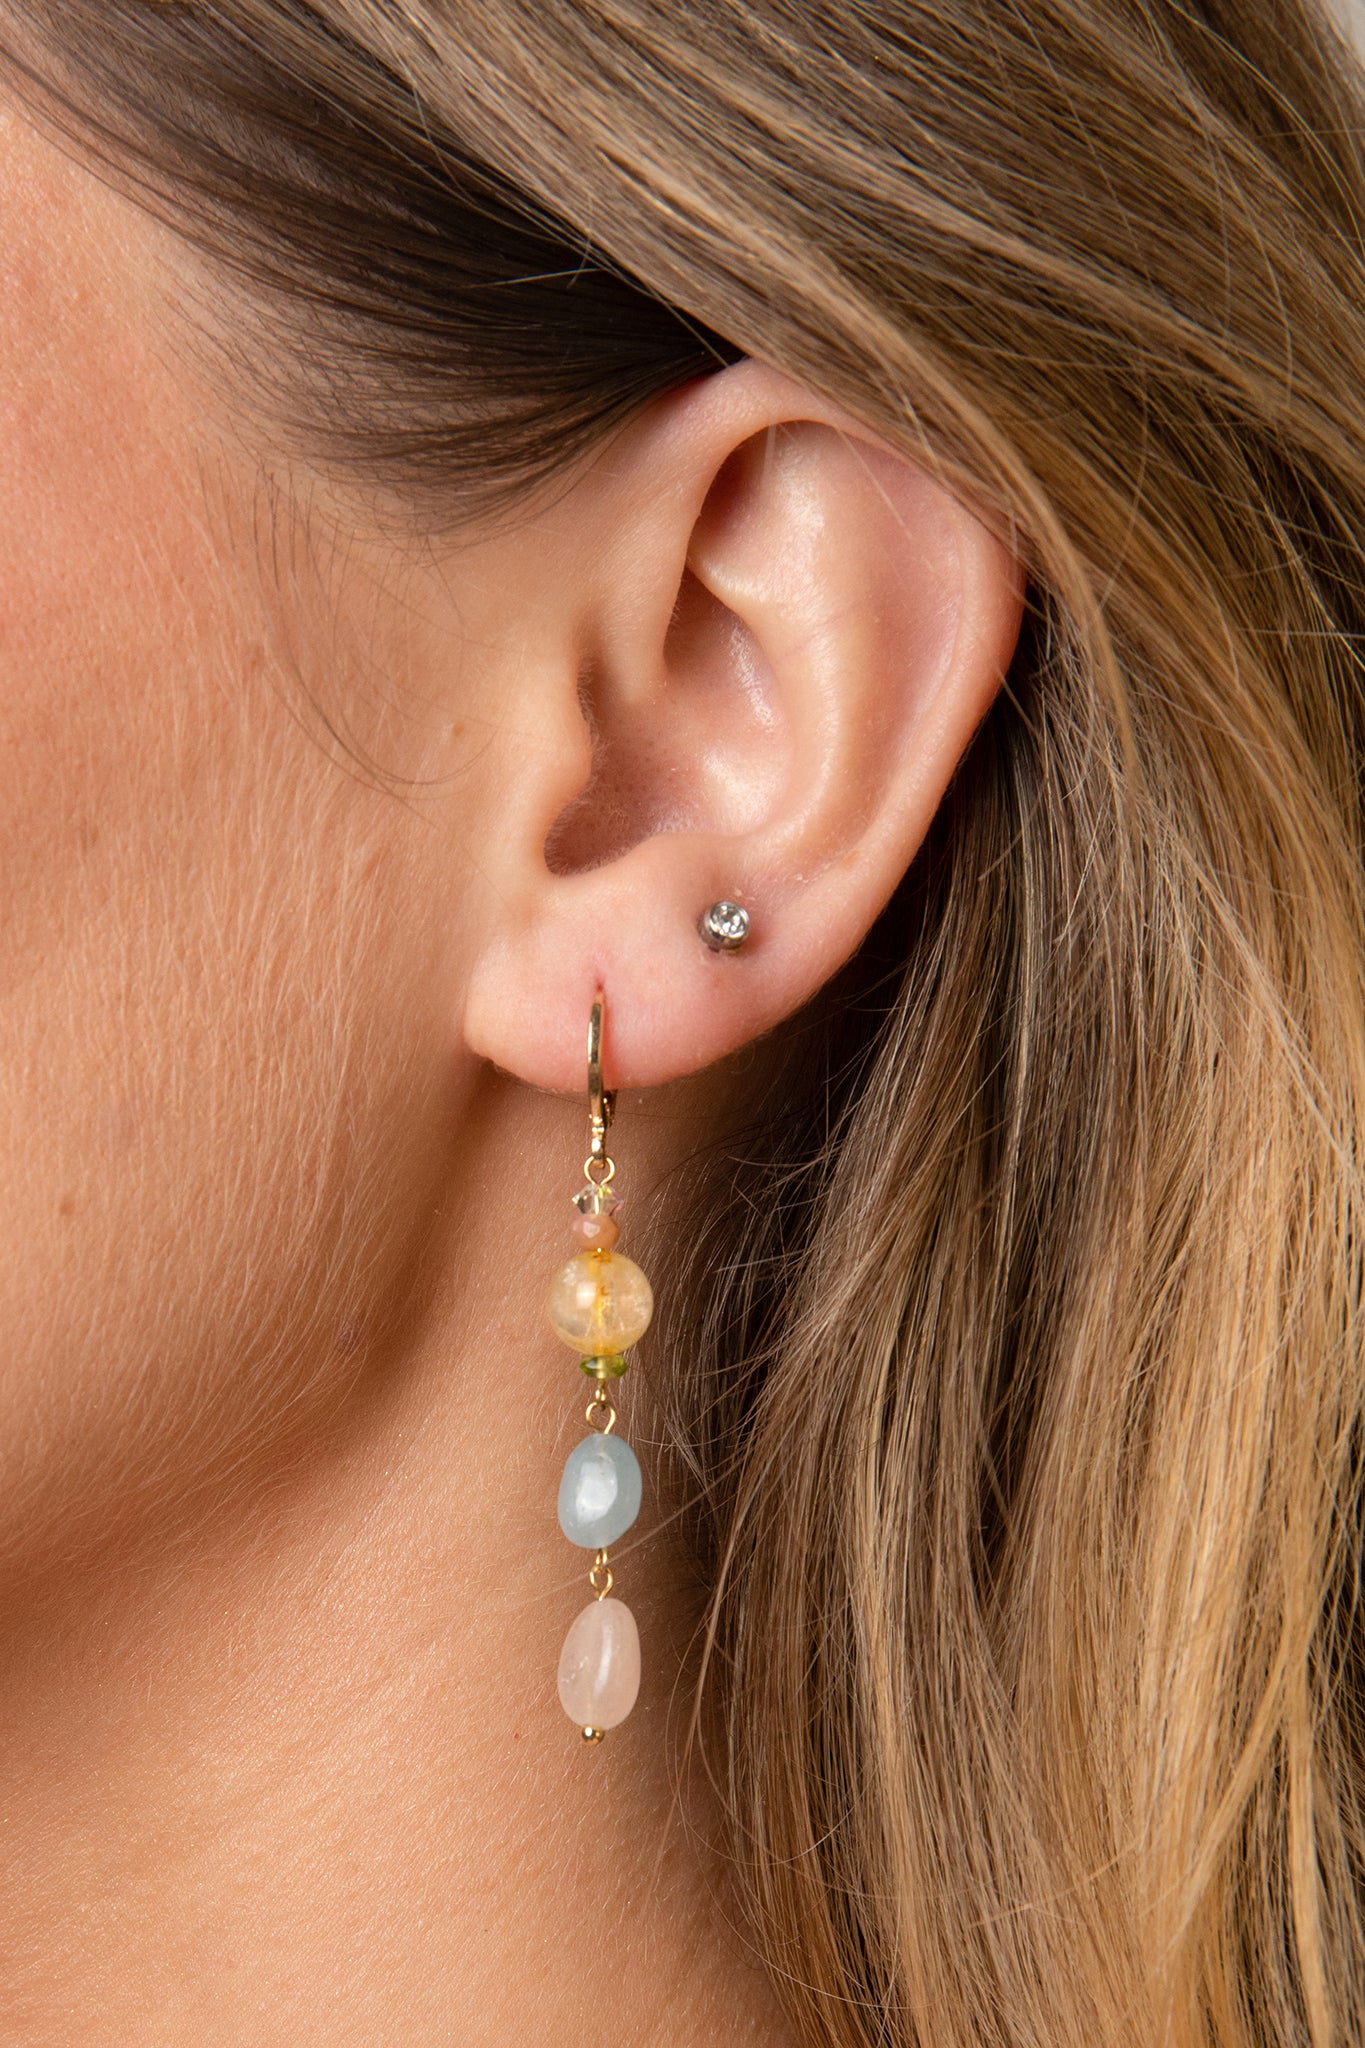 SG34 - High Fashion Candy earrings